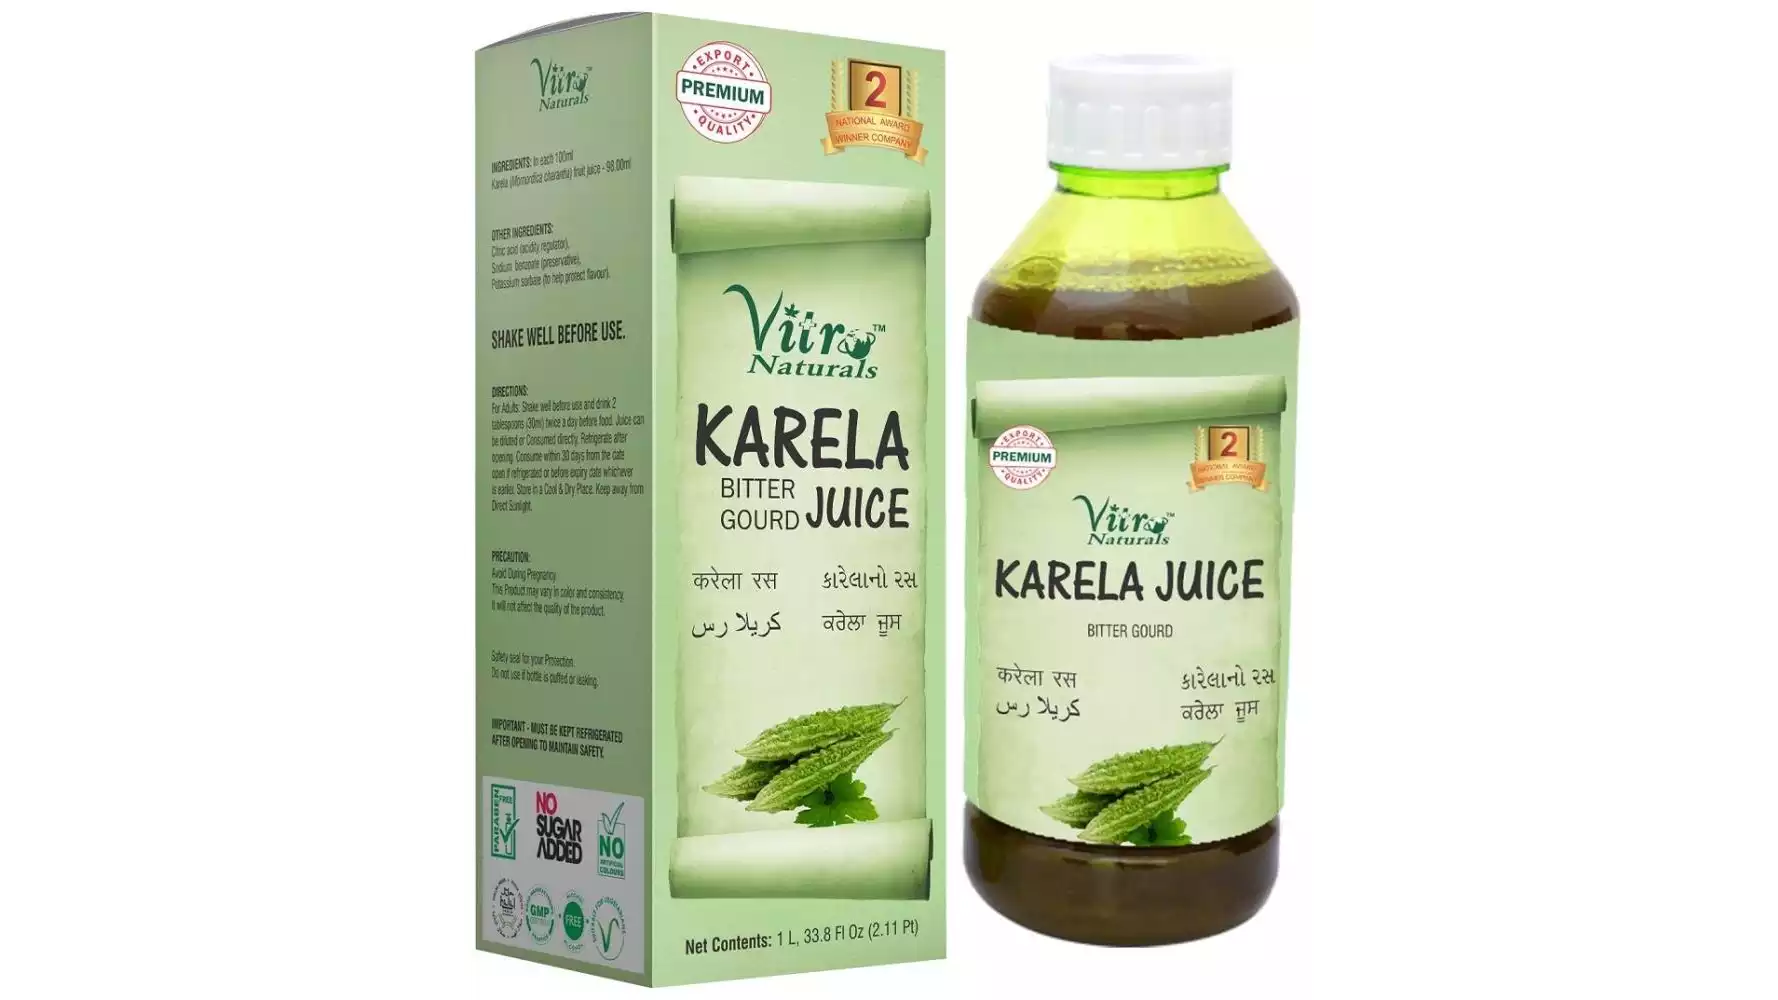 Vitro Naturals Karela Juice (1liter)